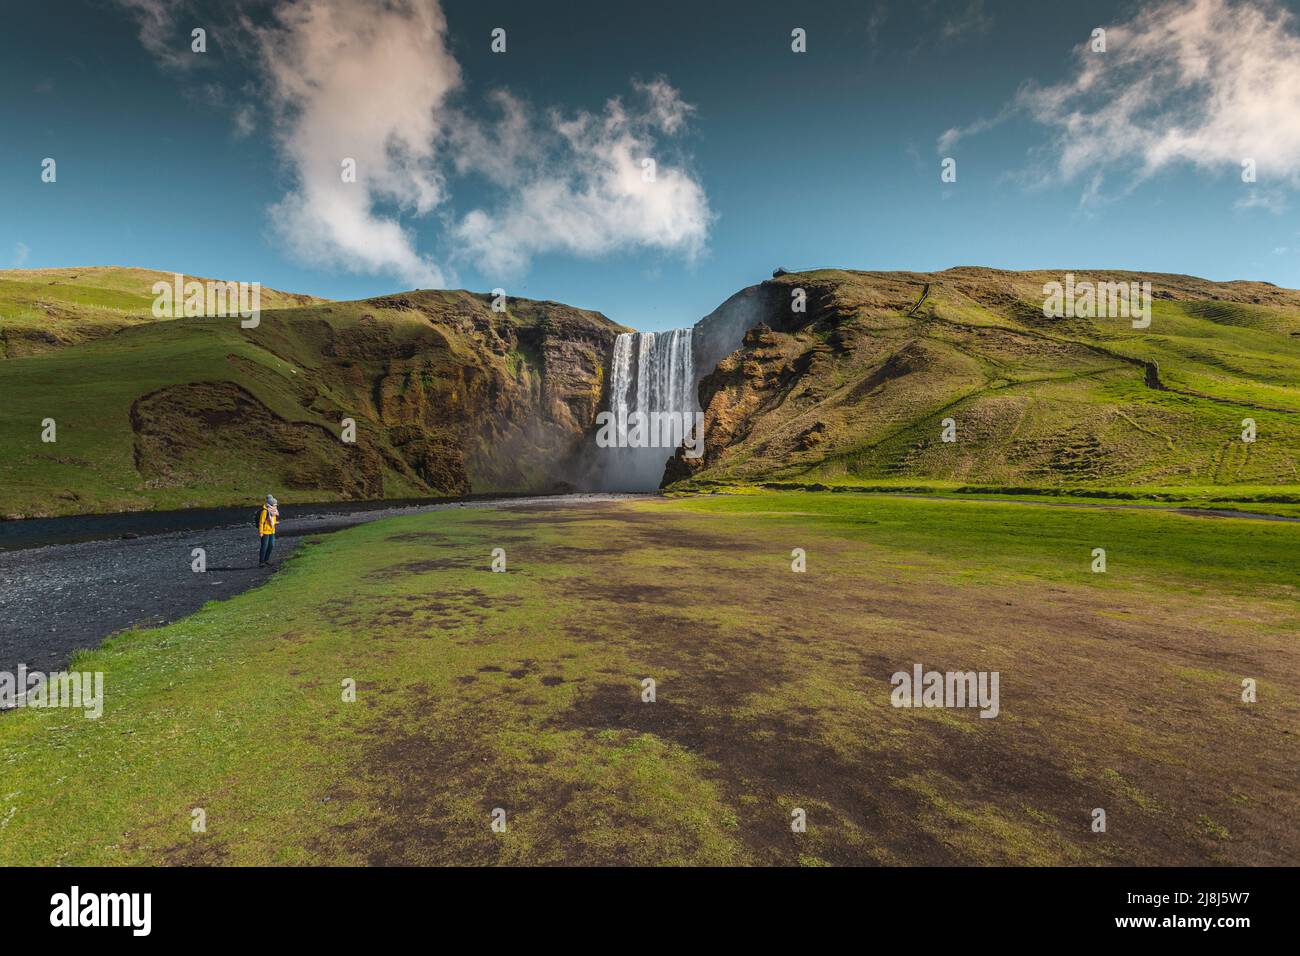 The amazing Skogafoss waterfall in Iceland Stock Photo